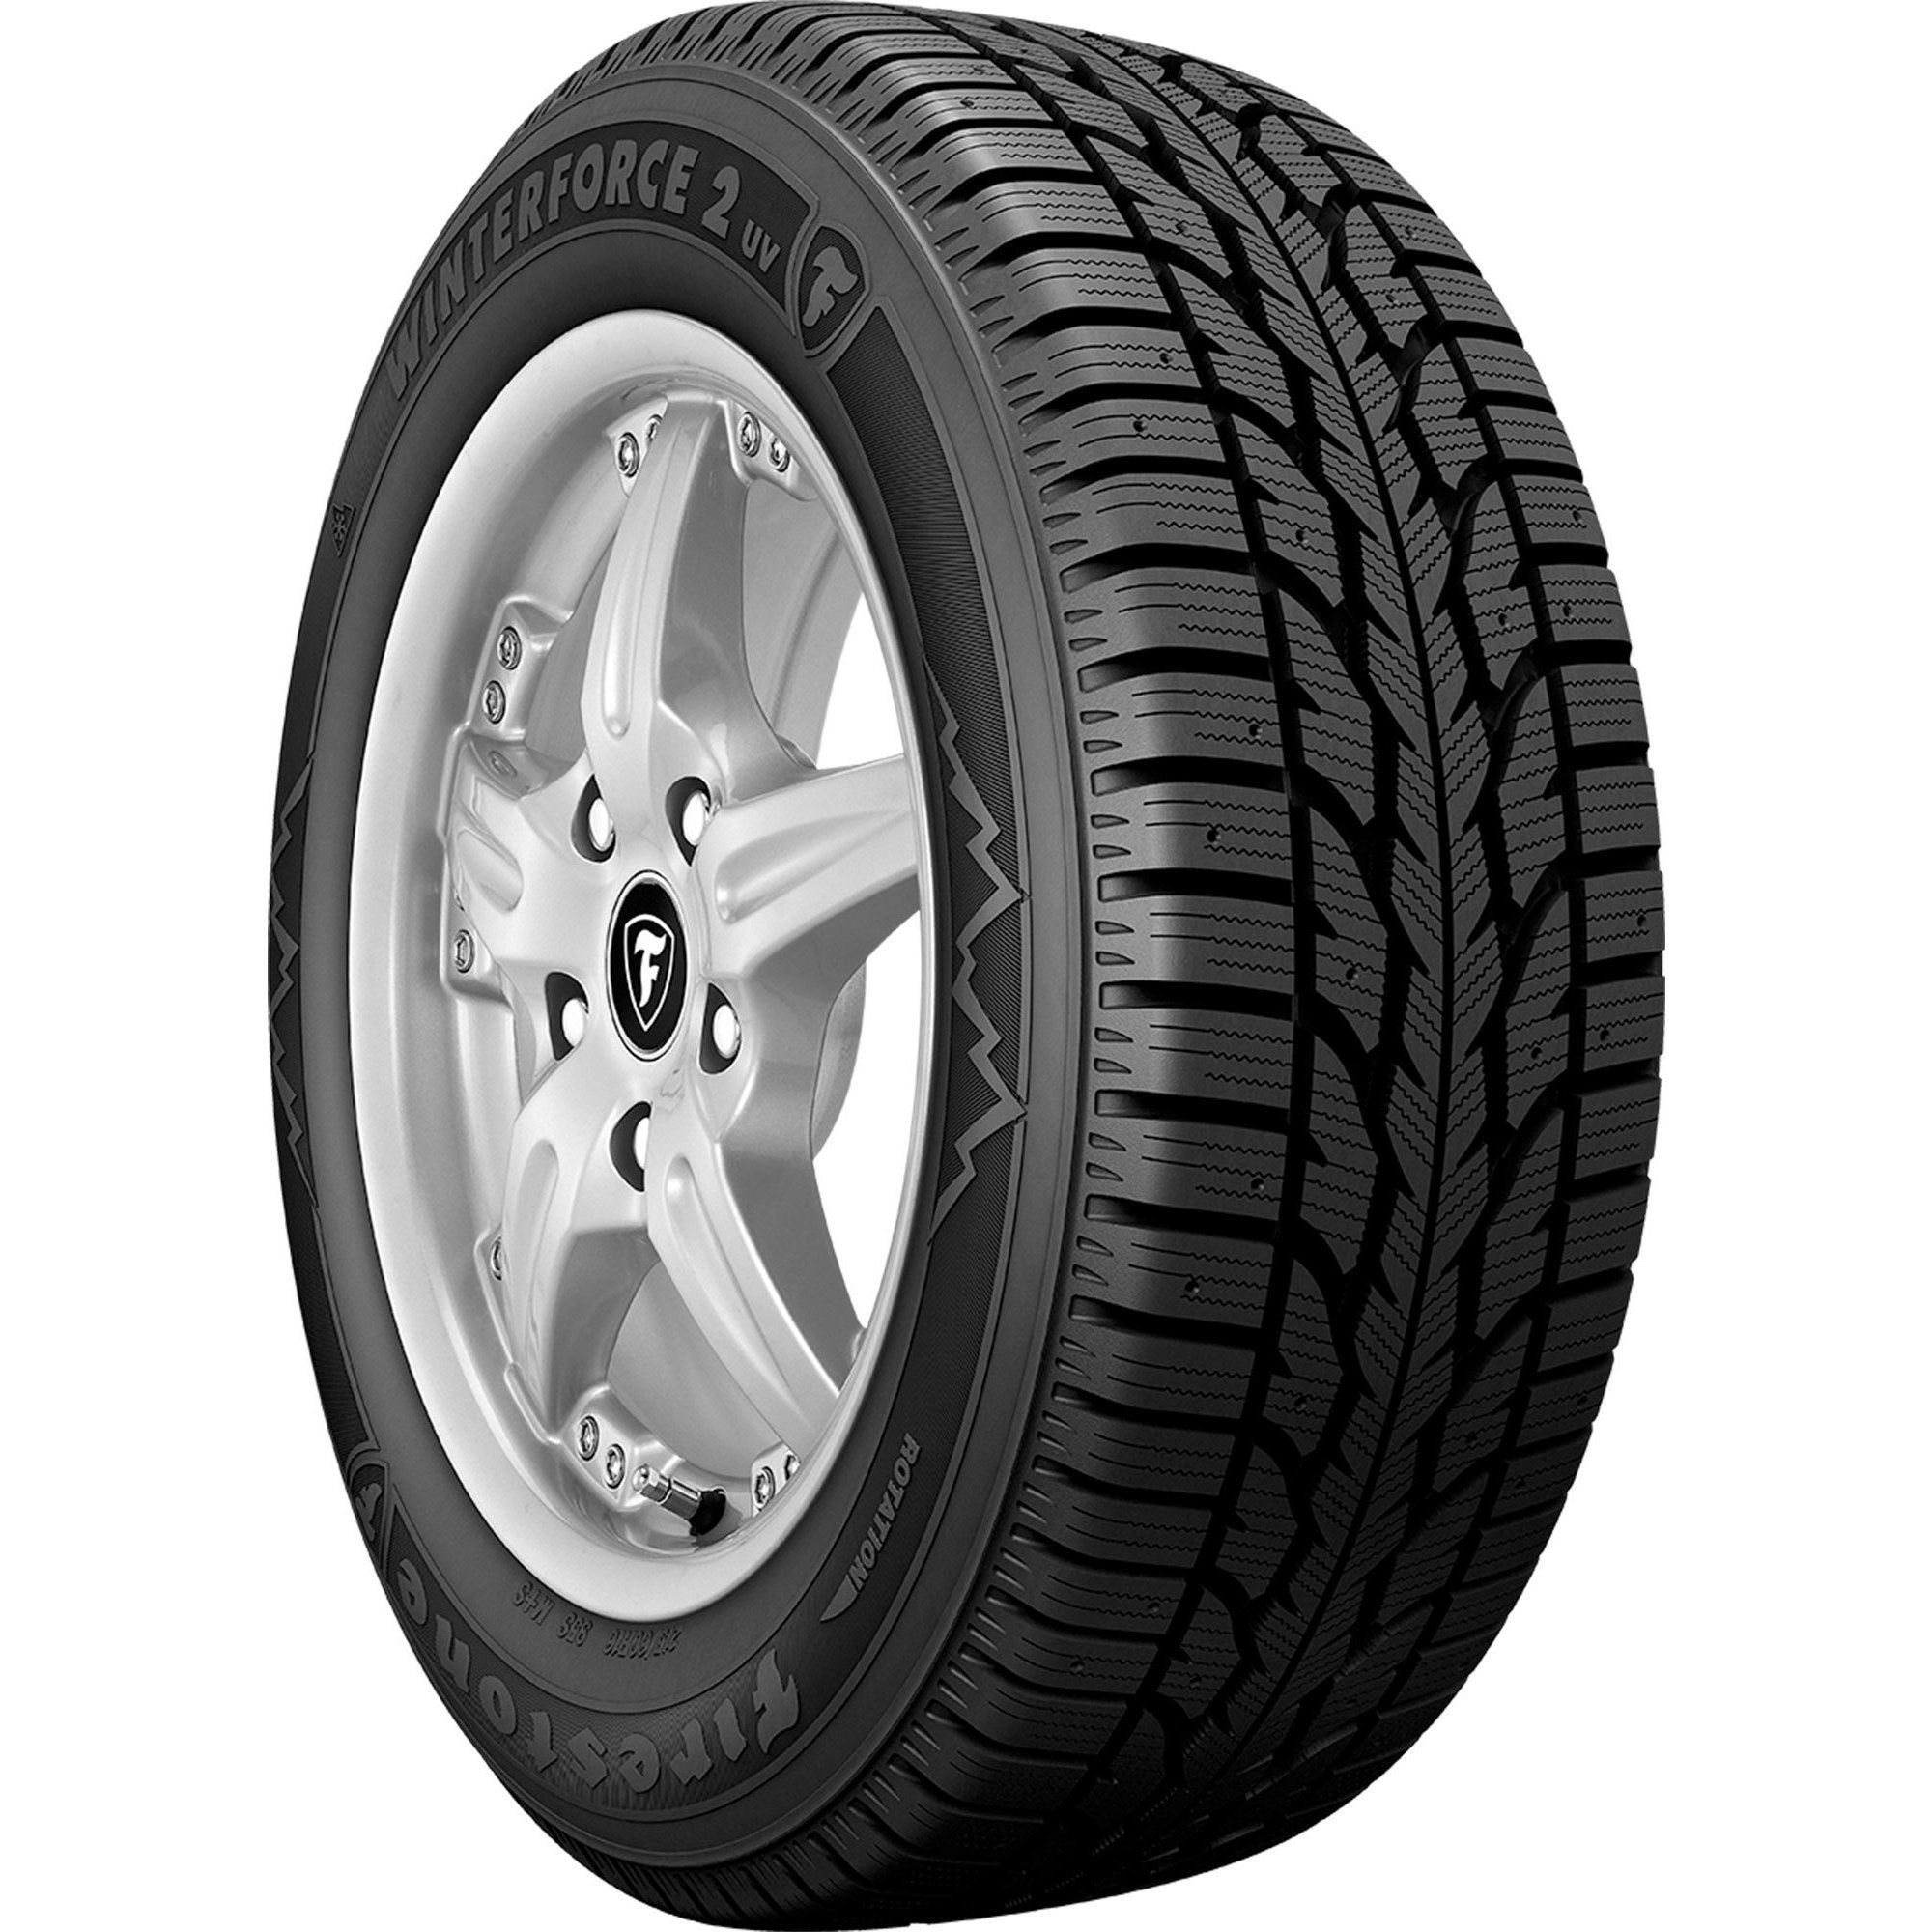 FIRESTONE WINTERFORCE2 UV 235/55R18 (28.2X9.3R 18) Tires